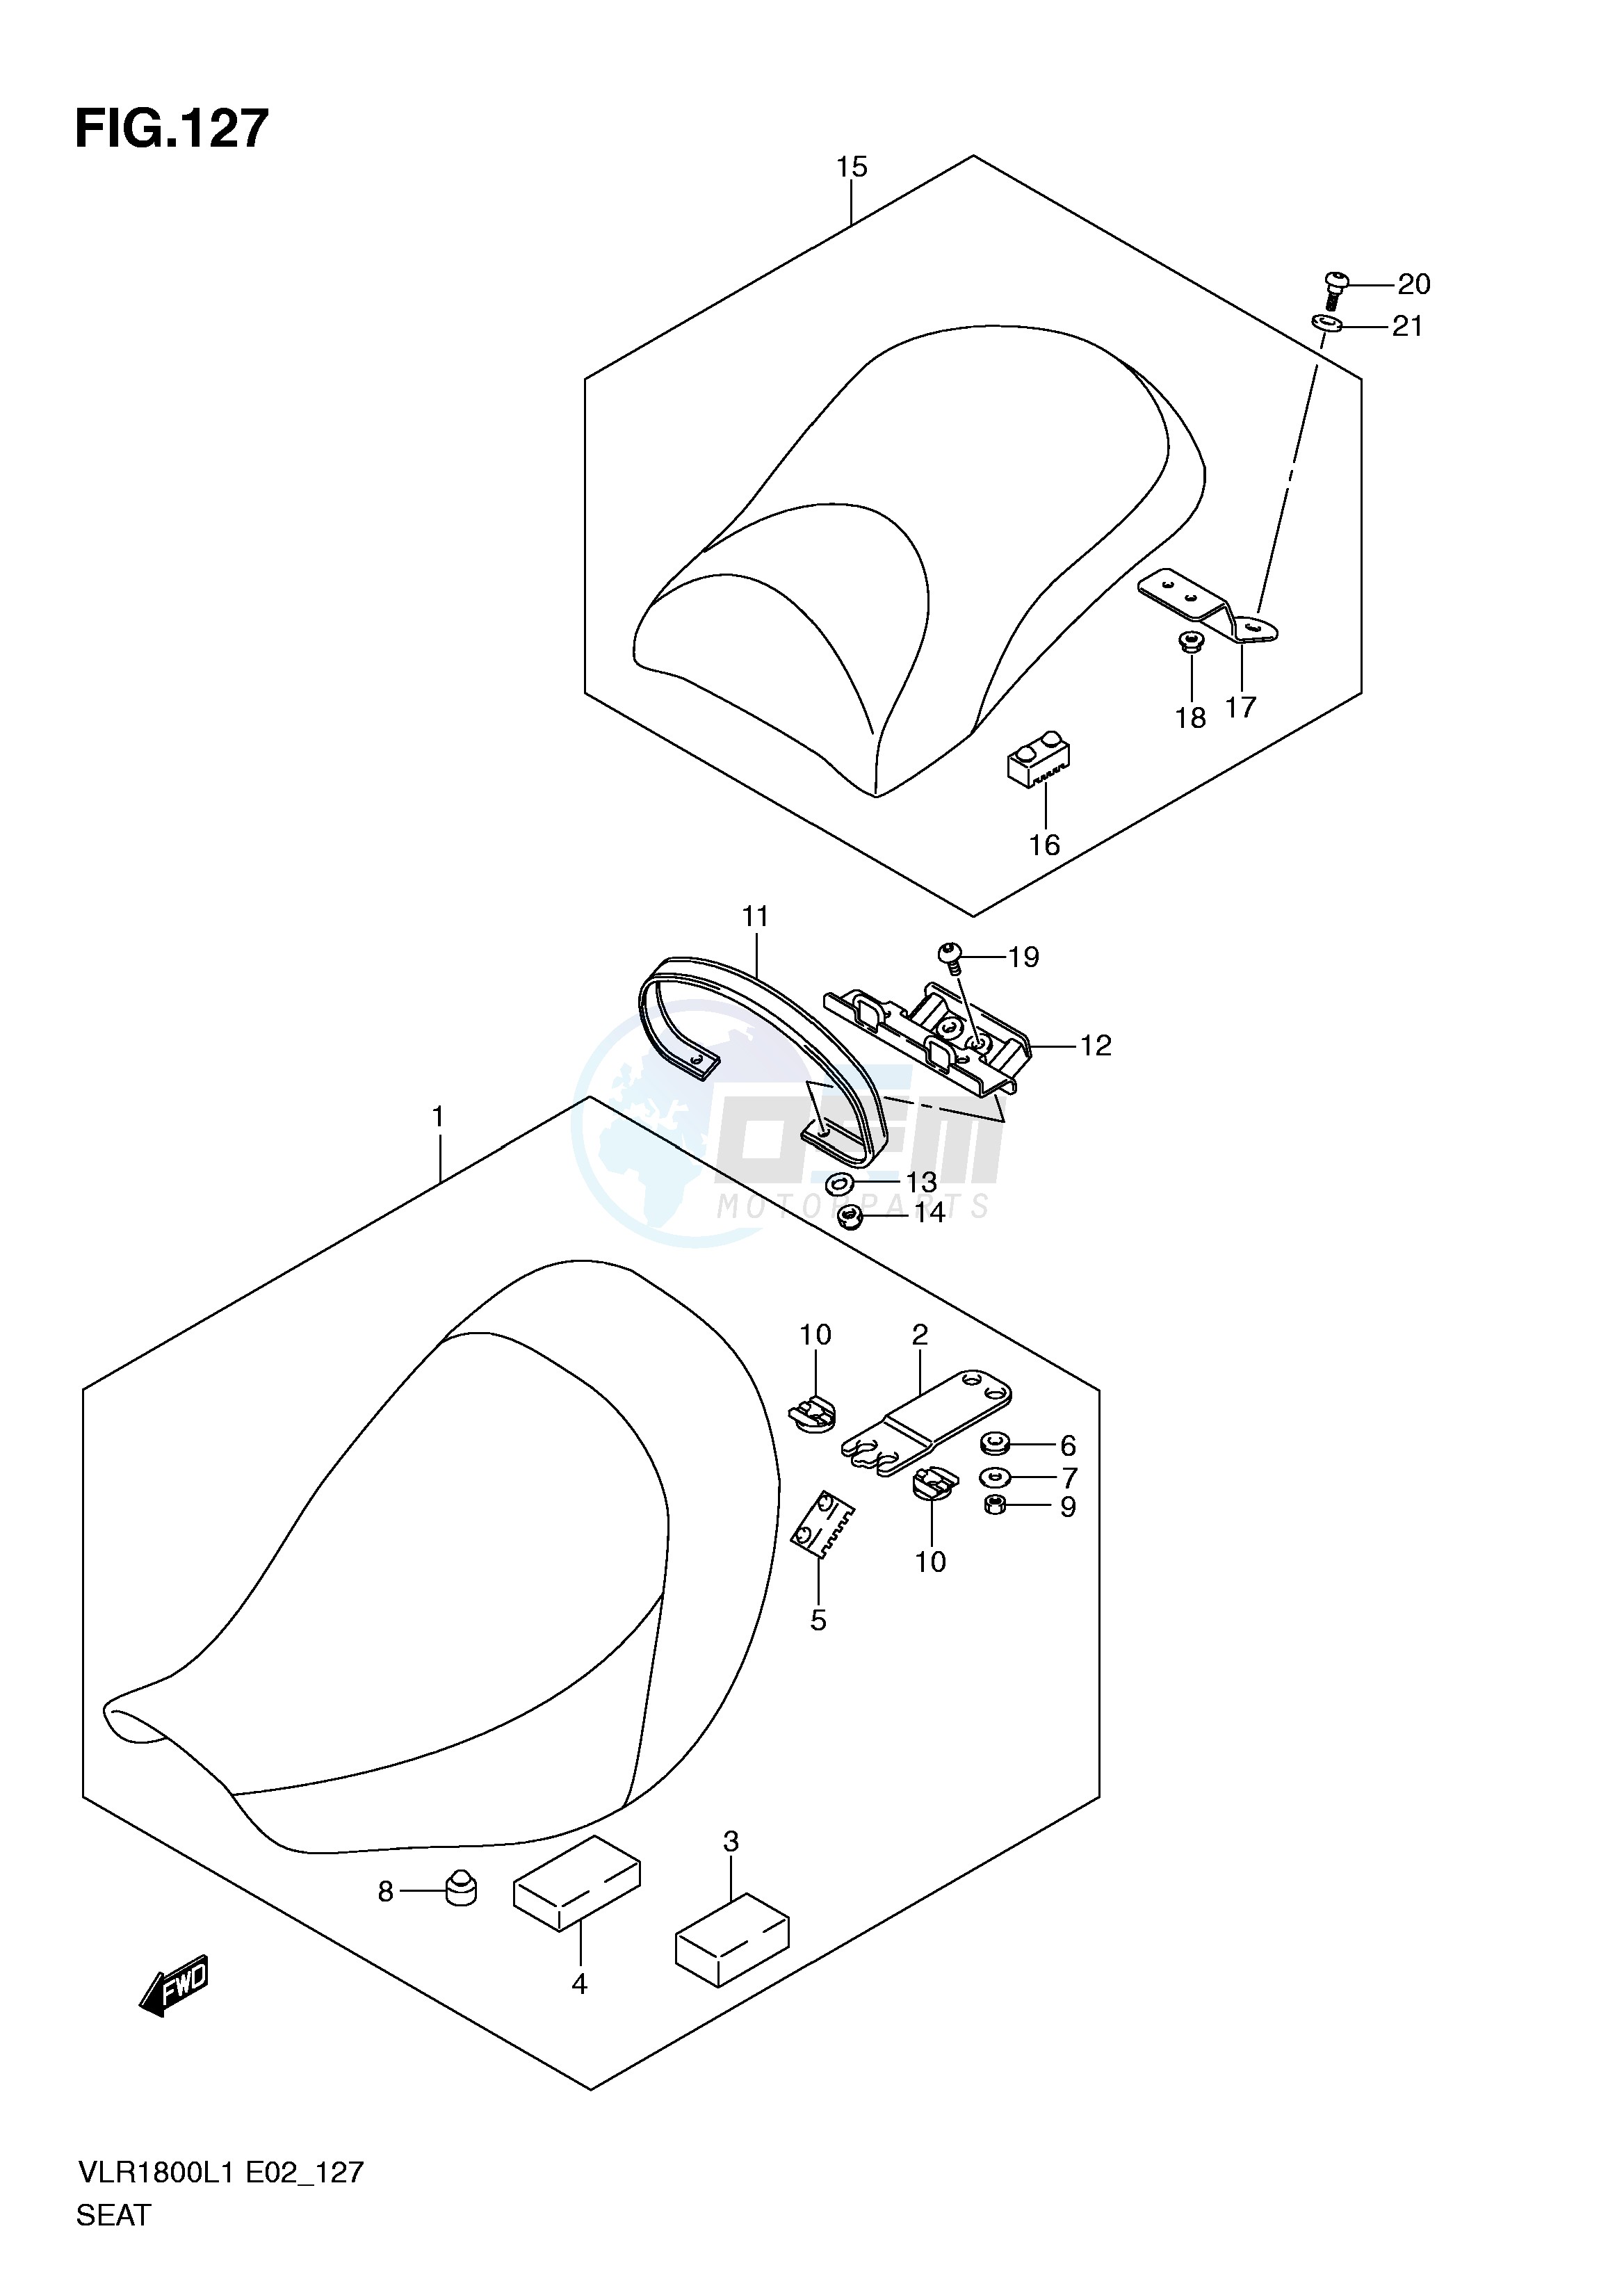 SEAT (VLR1800L1 E24) blueprint